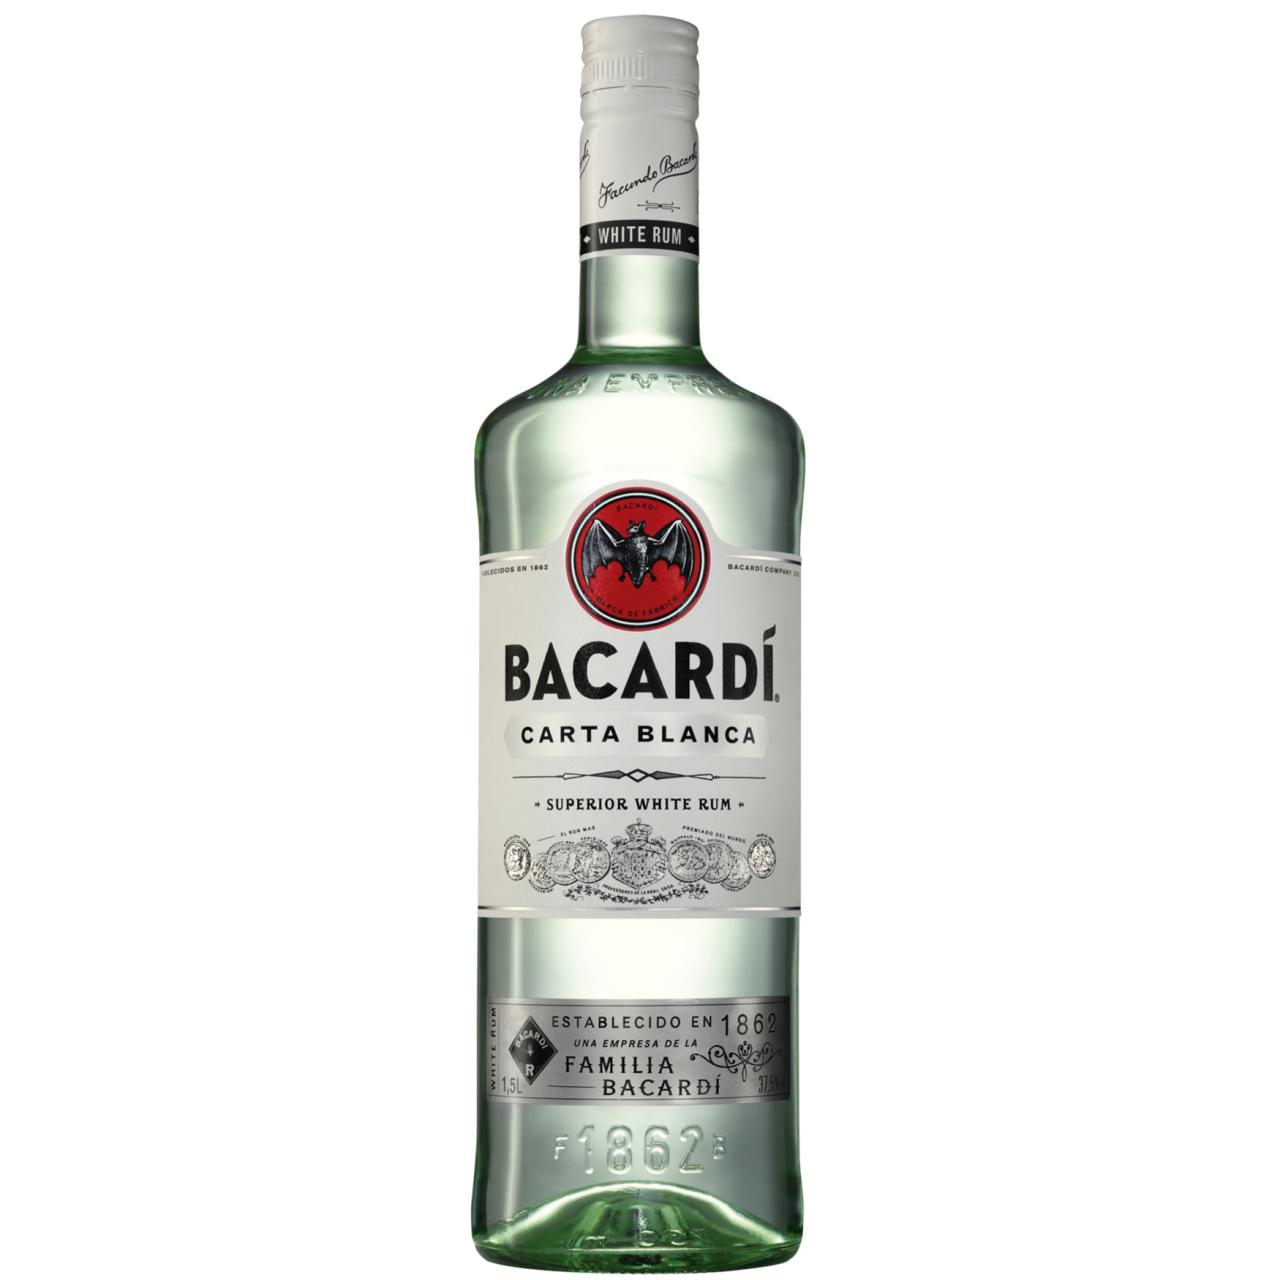 Bacardi Rum Carta Blanca 37,5% 1,5l